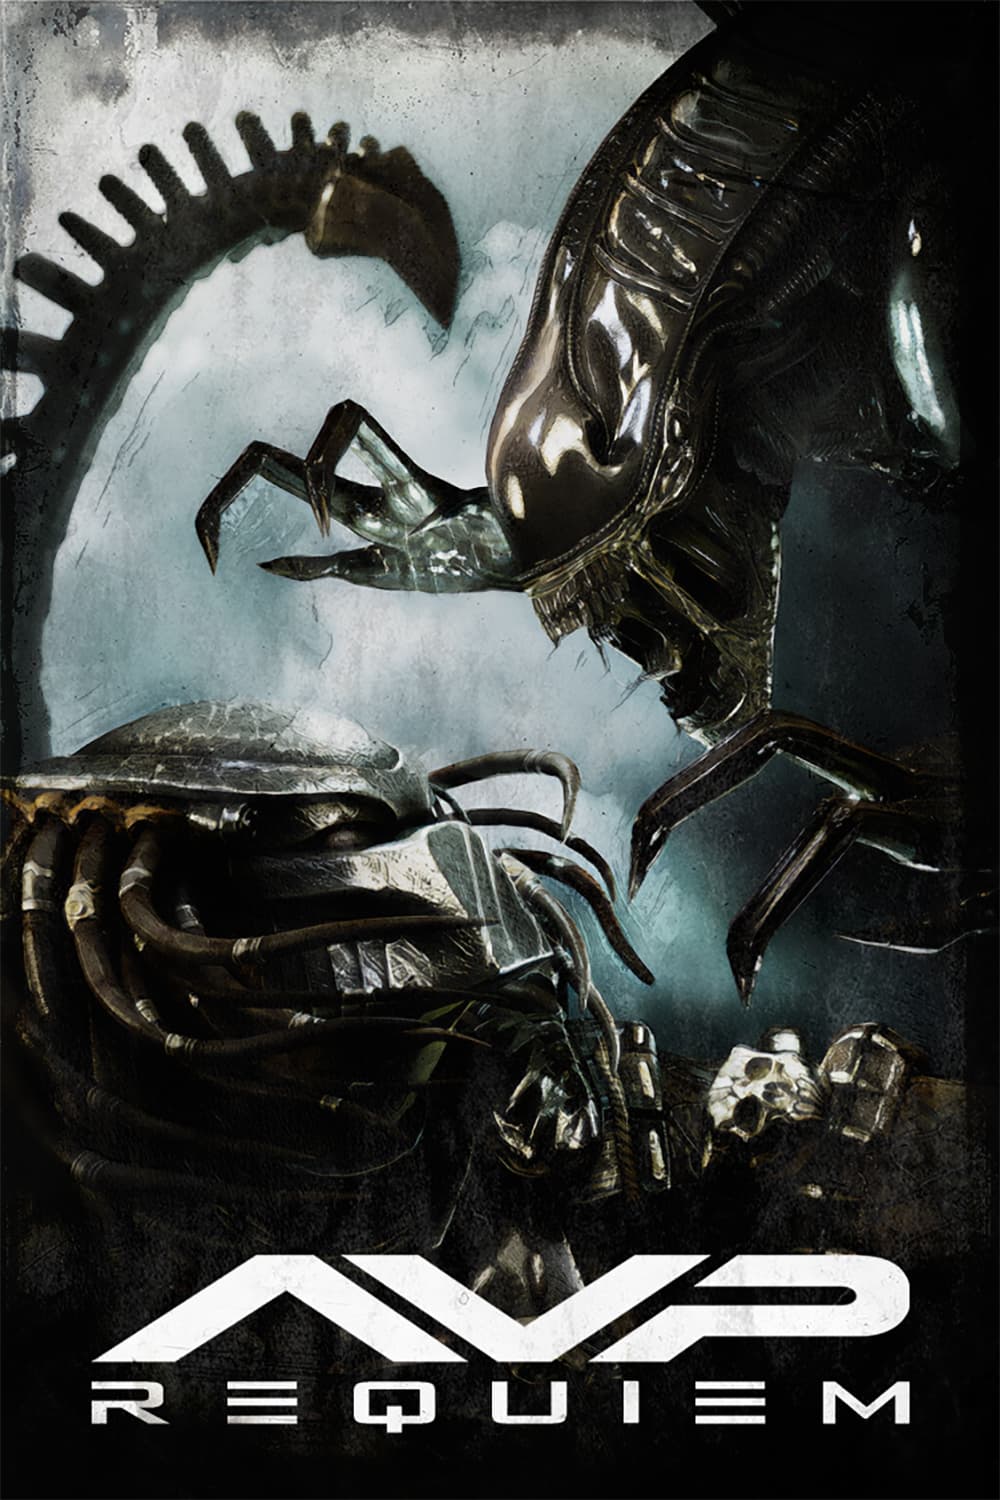 Aliens Vs. Predator: Requiem 27x40 Movie Poster (2007) - etriggerz